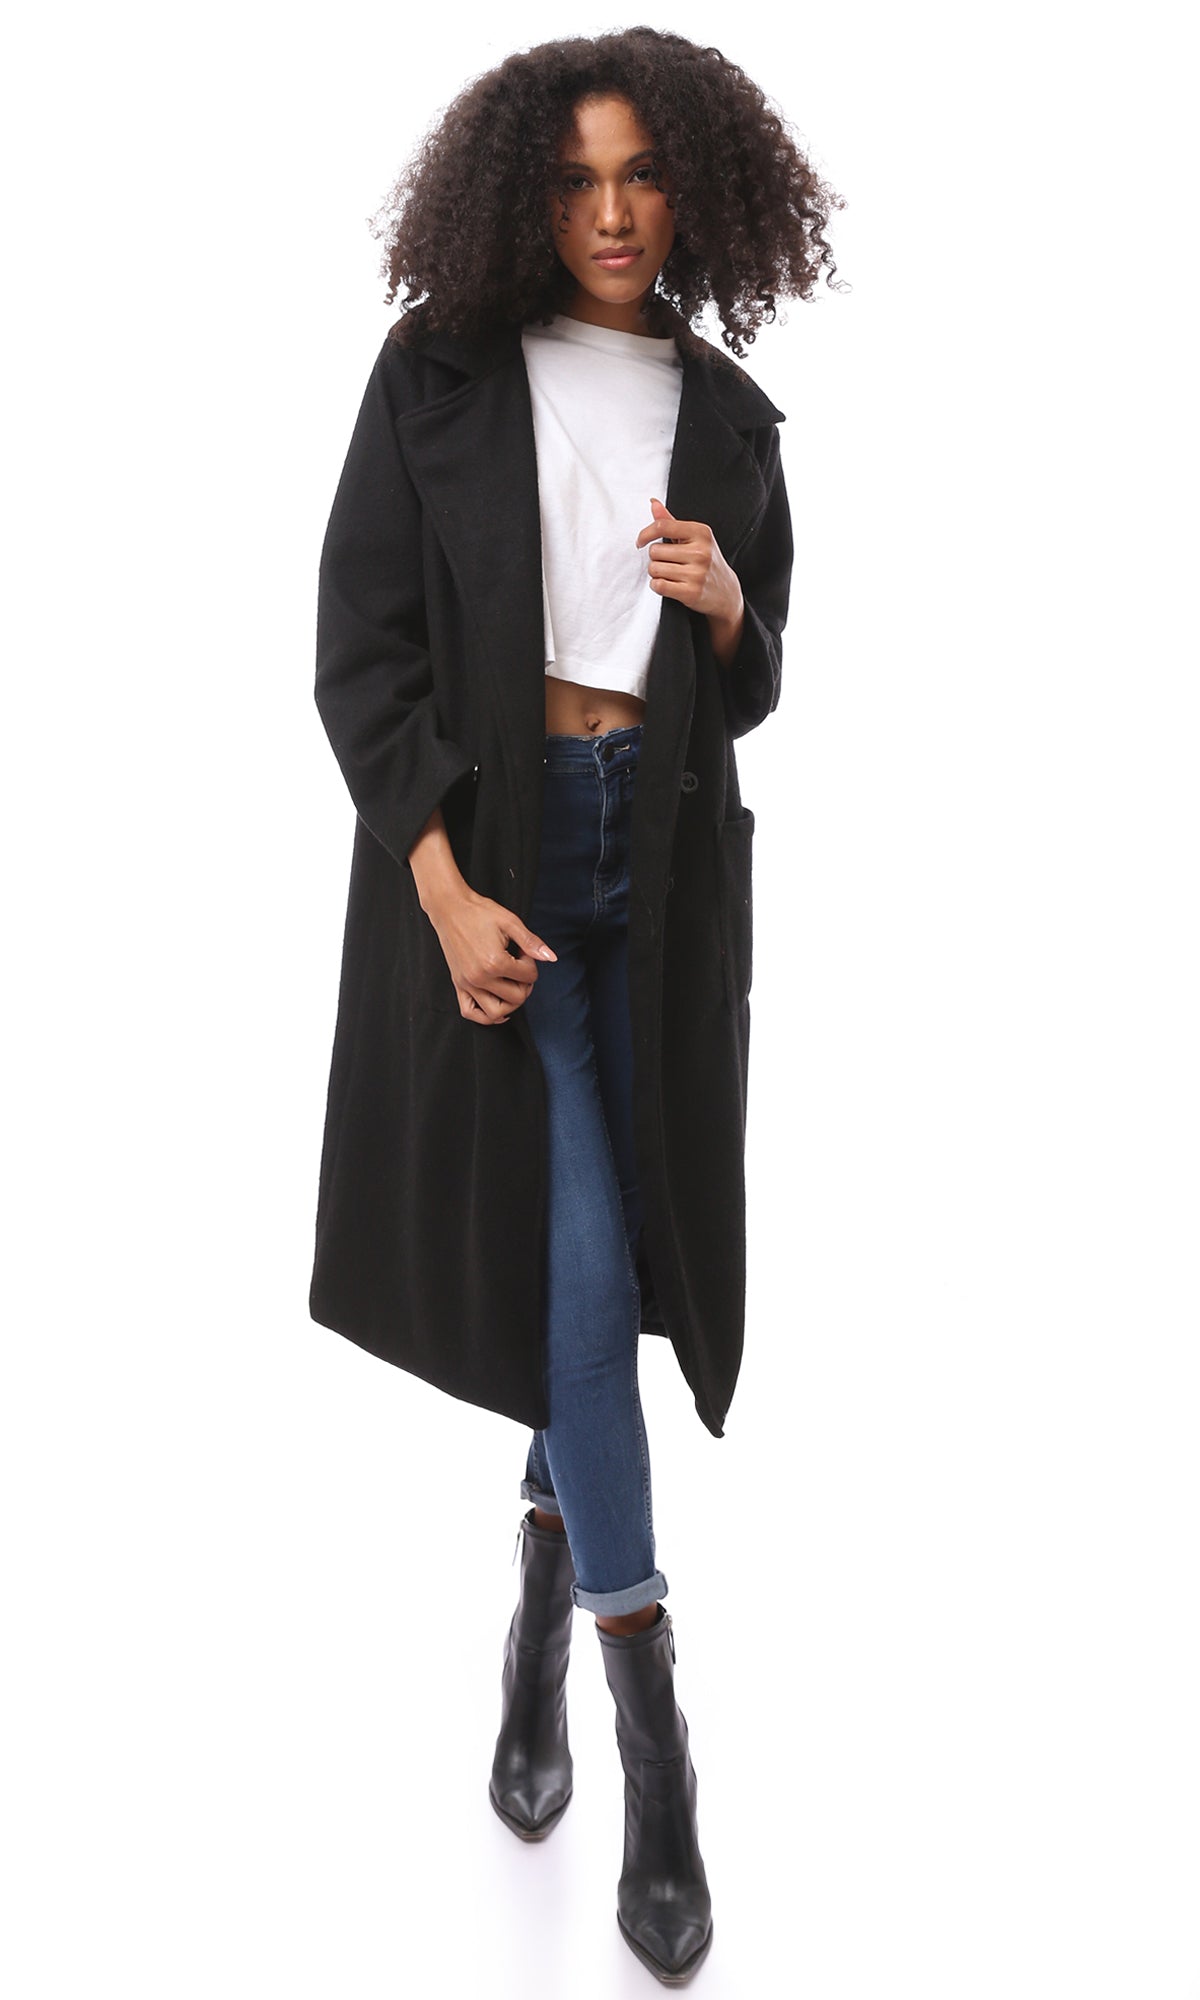 O174173 Long Sleeves Solid Black Gokh Coat